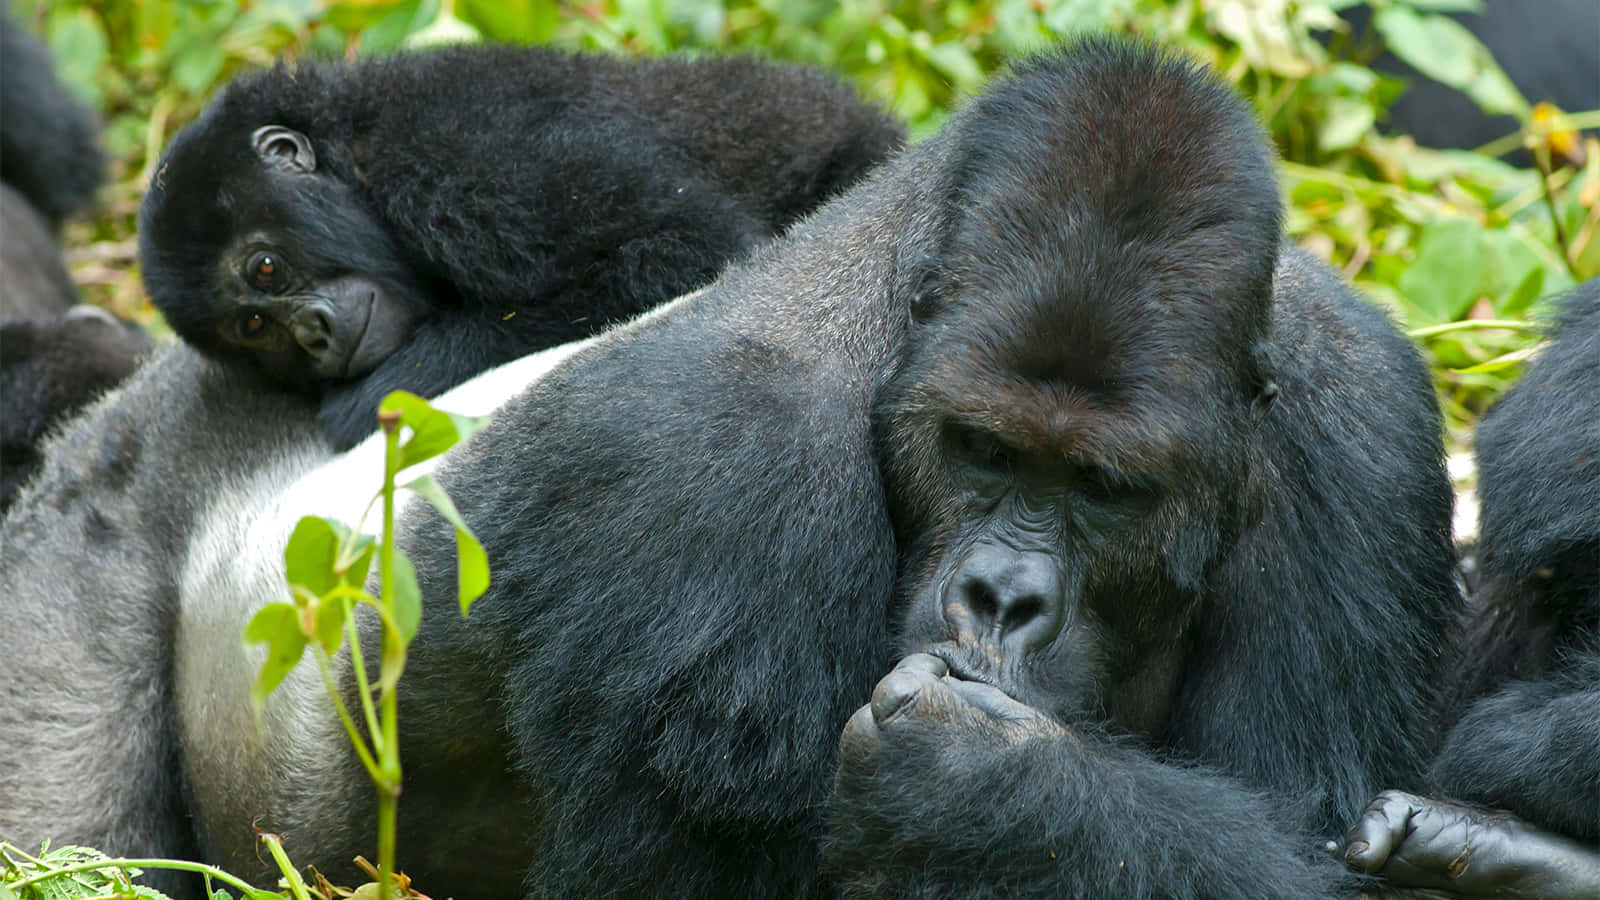 A close-up of an inquisitive gorilla